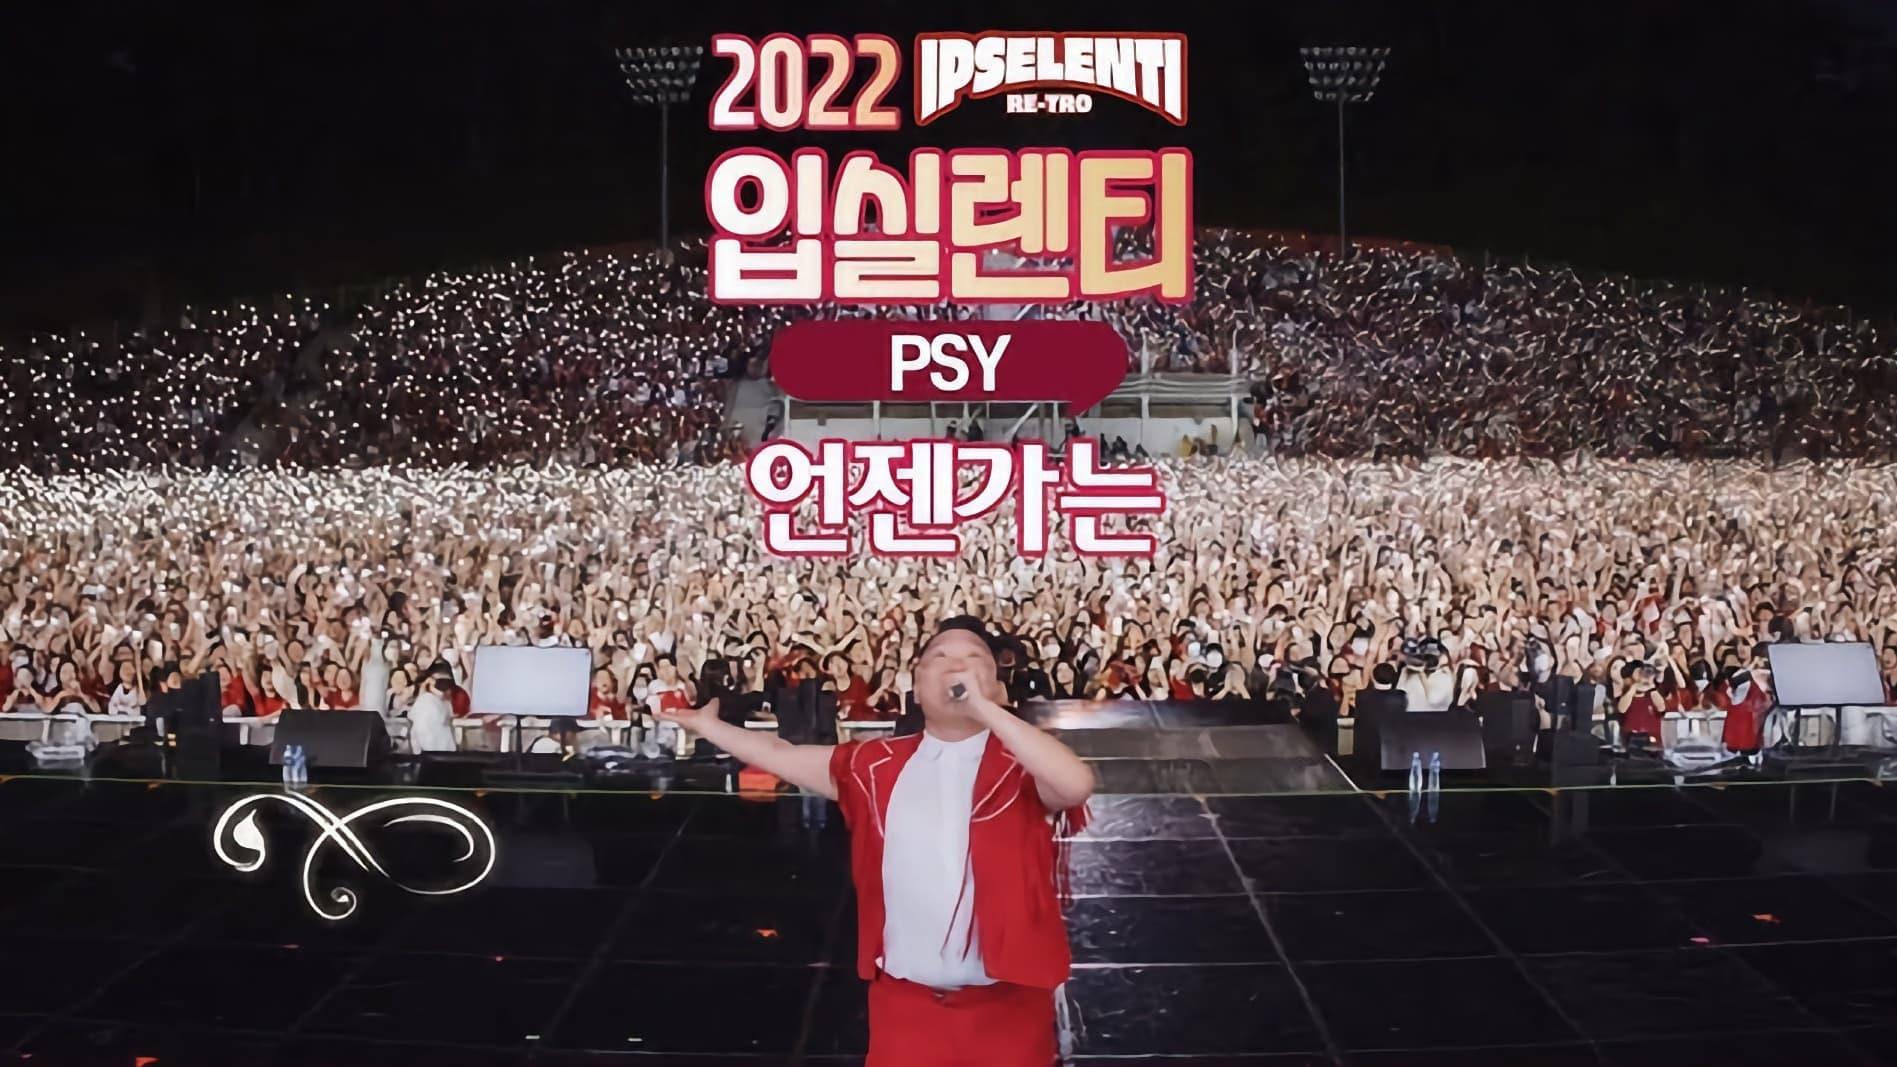 Psy Live @ IPSELENTI 2022 backdrop